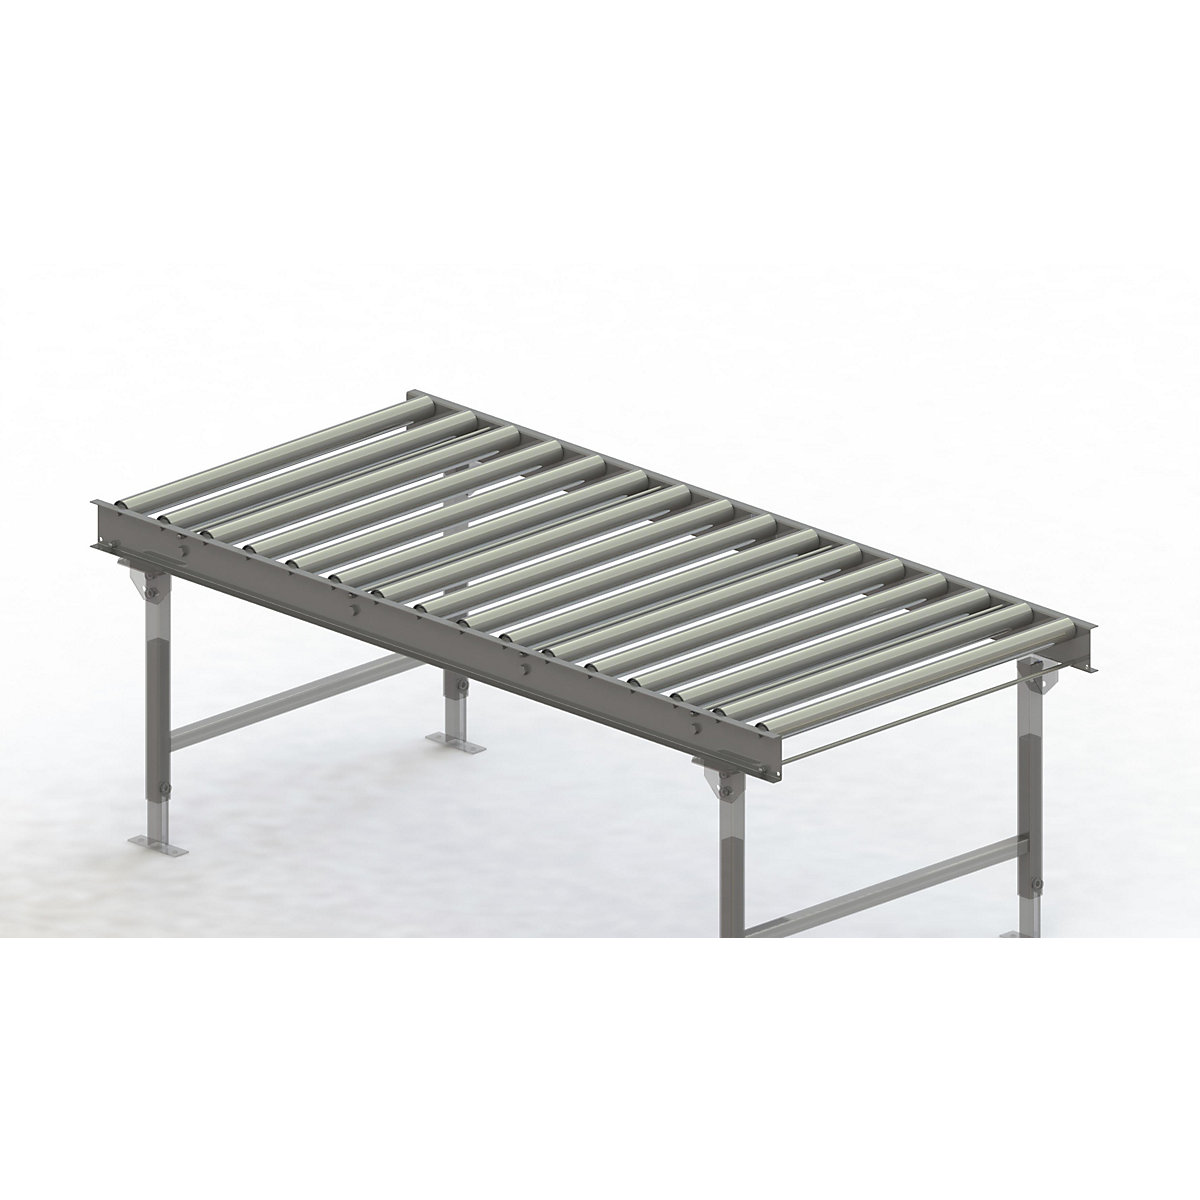 Gura – Roller conveyor, steel frame with zinc plated steel rollers, track width 900 mm, distance between axles 125 mm, length 2 m